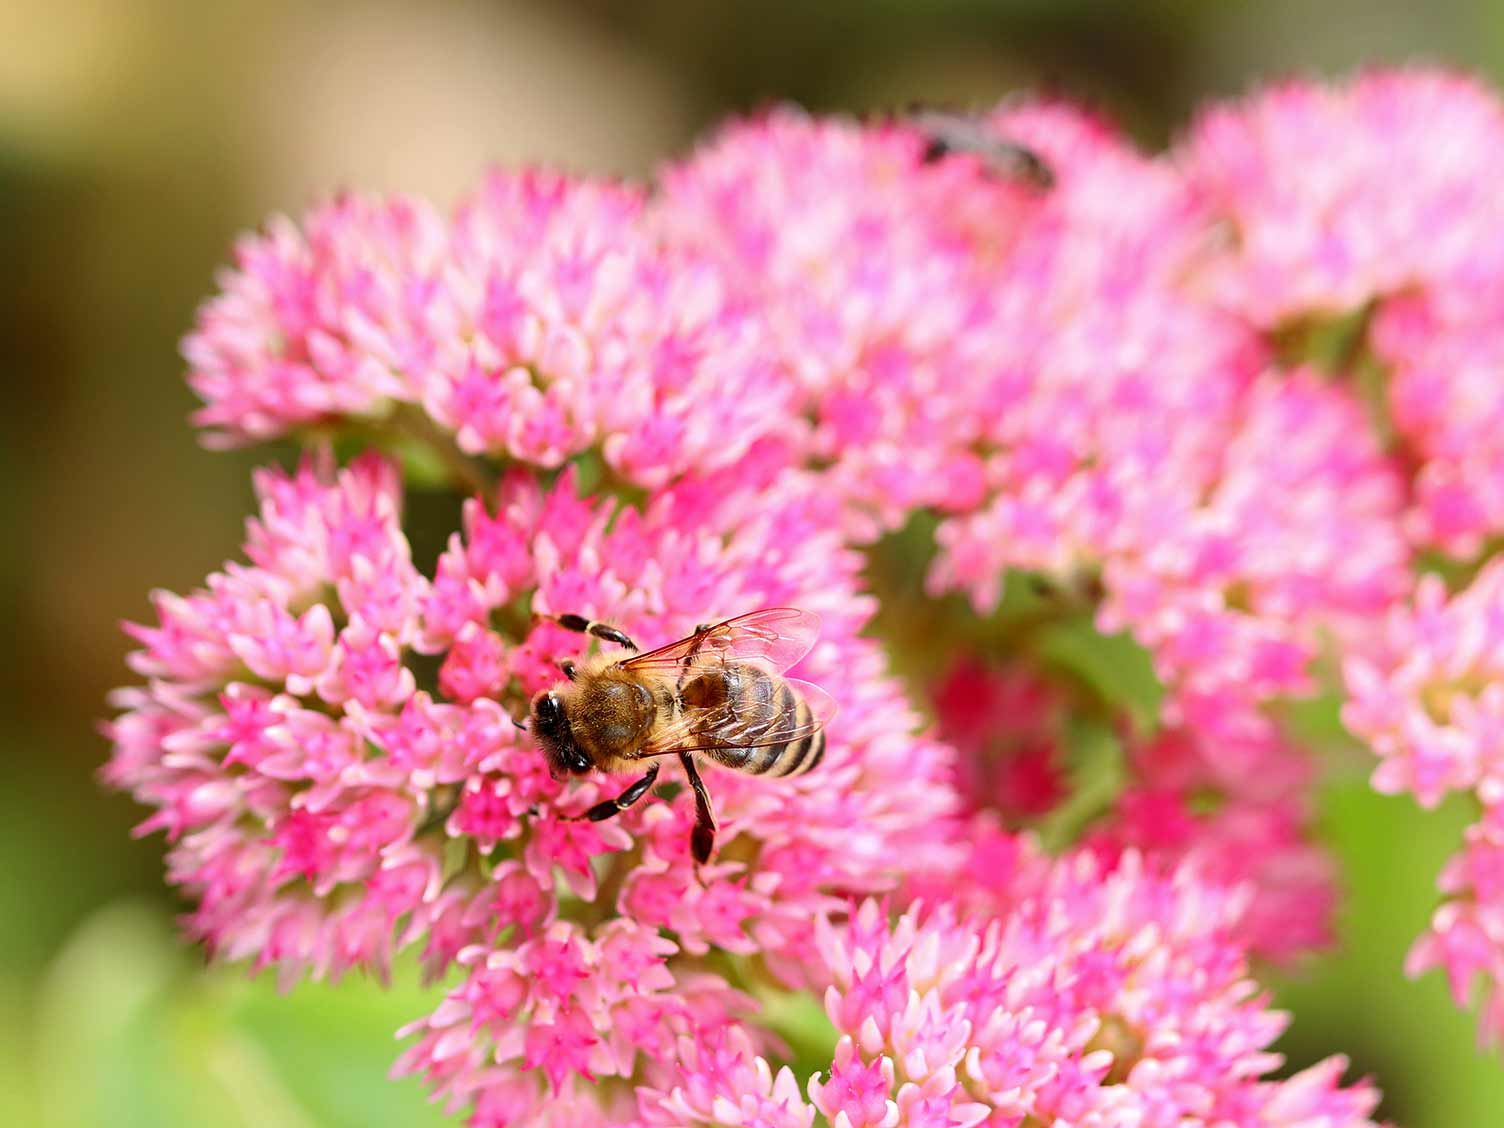 Bees love Sedum flowers